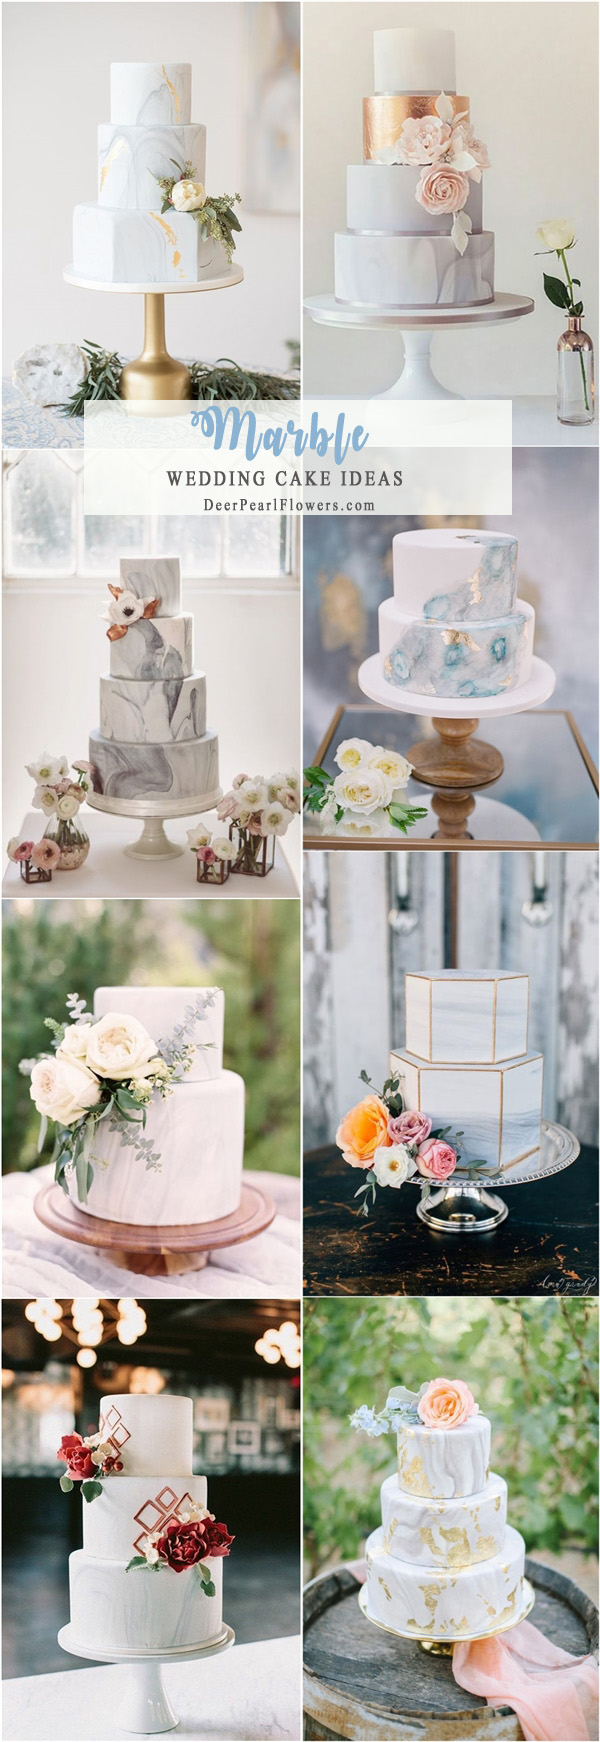 Marble wedding cake ideas